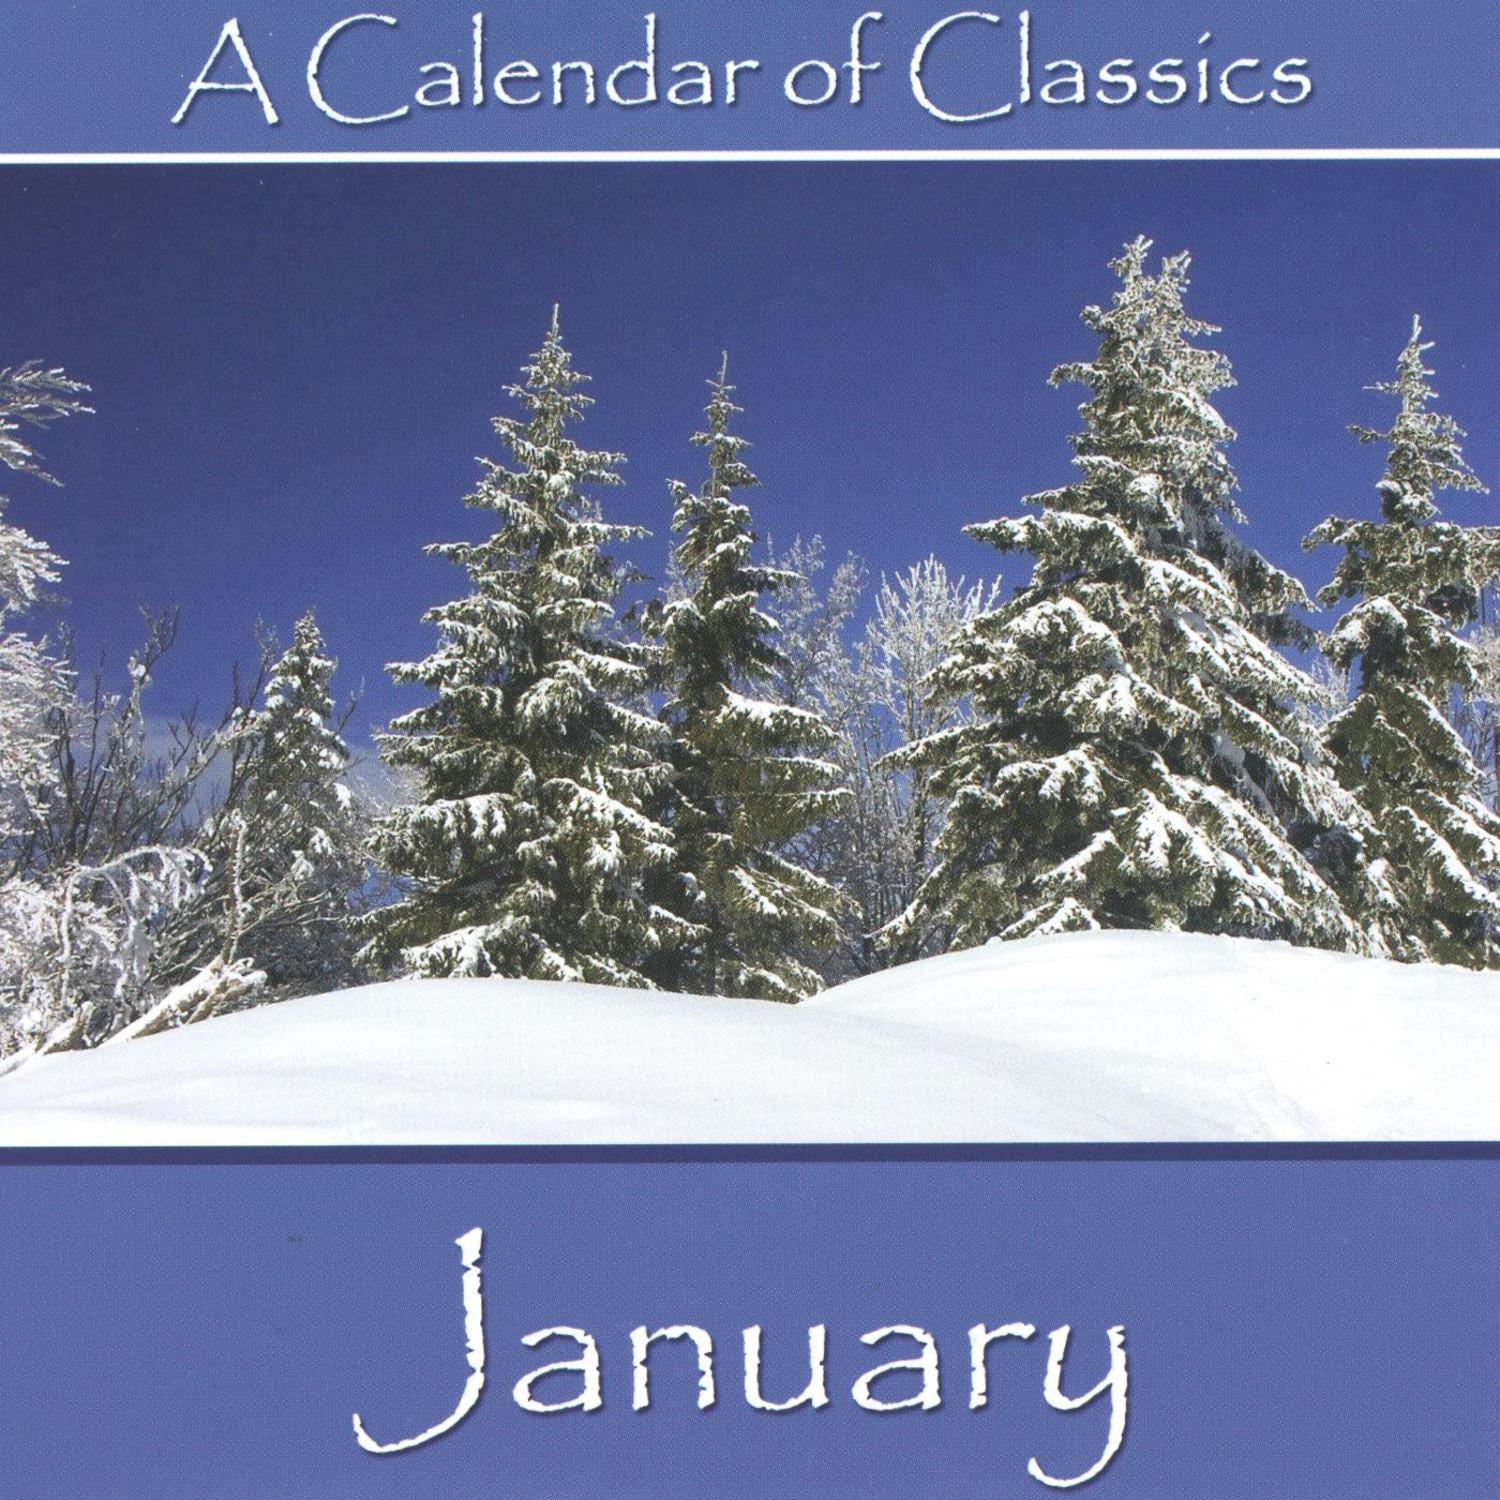 A Calendar Of Classics - January